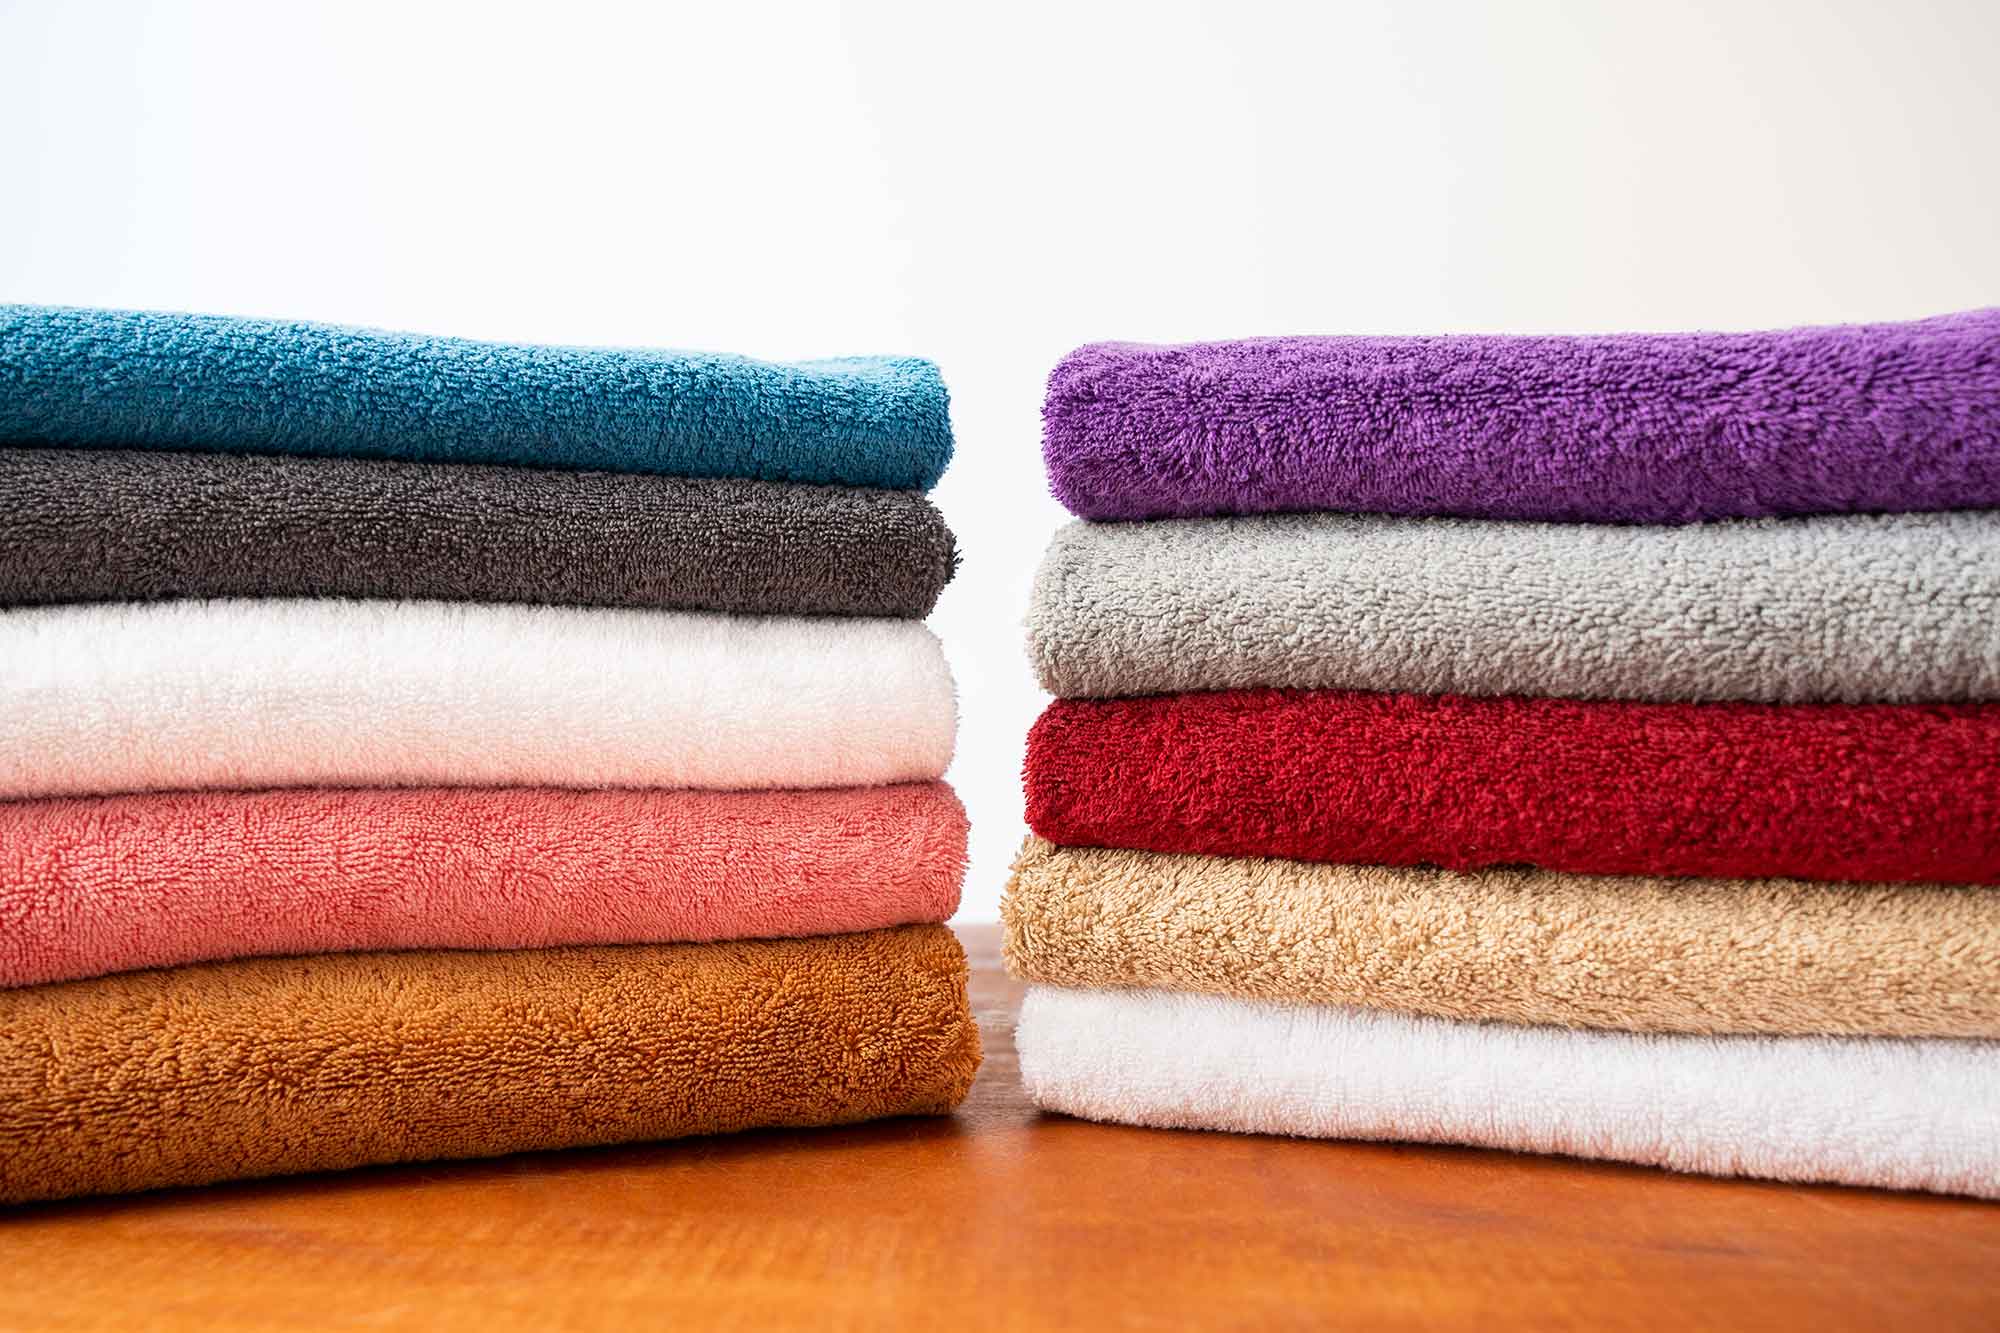 550 GSM Plush Machine Washable Royal Ascot 100% Zero Twist Cotton Towel Set 2 pc Set- 2 Large Bath Sheets Absorbent Softer Than a Cloud SPA Towels